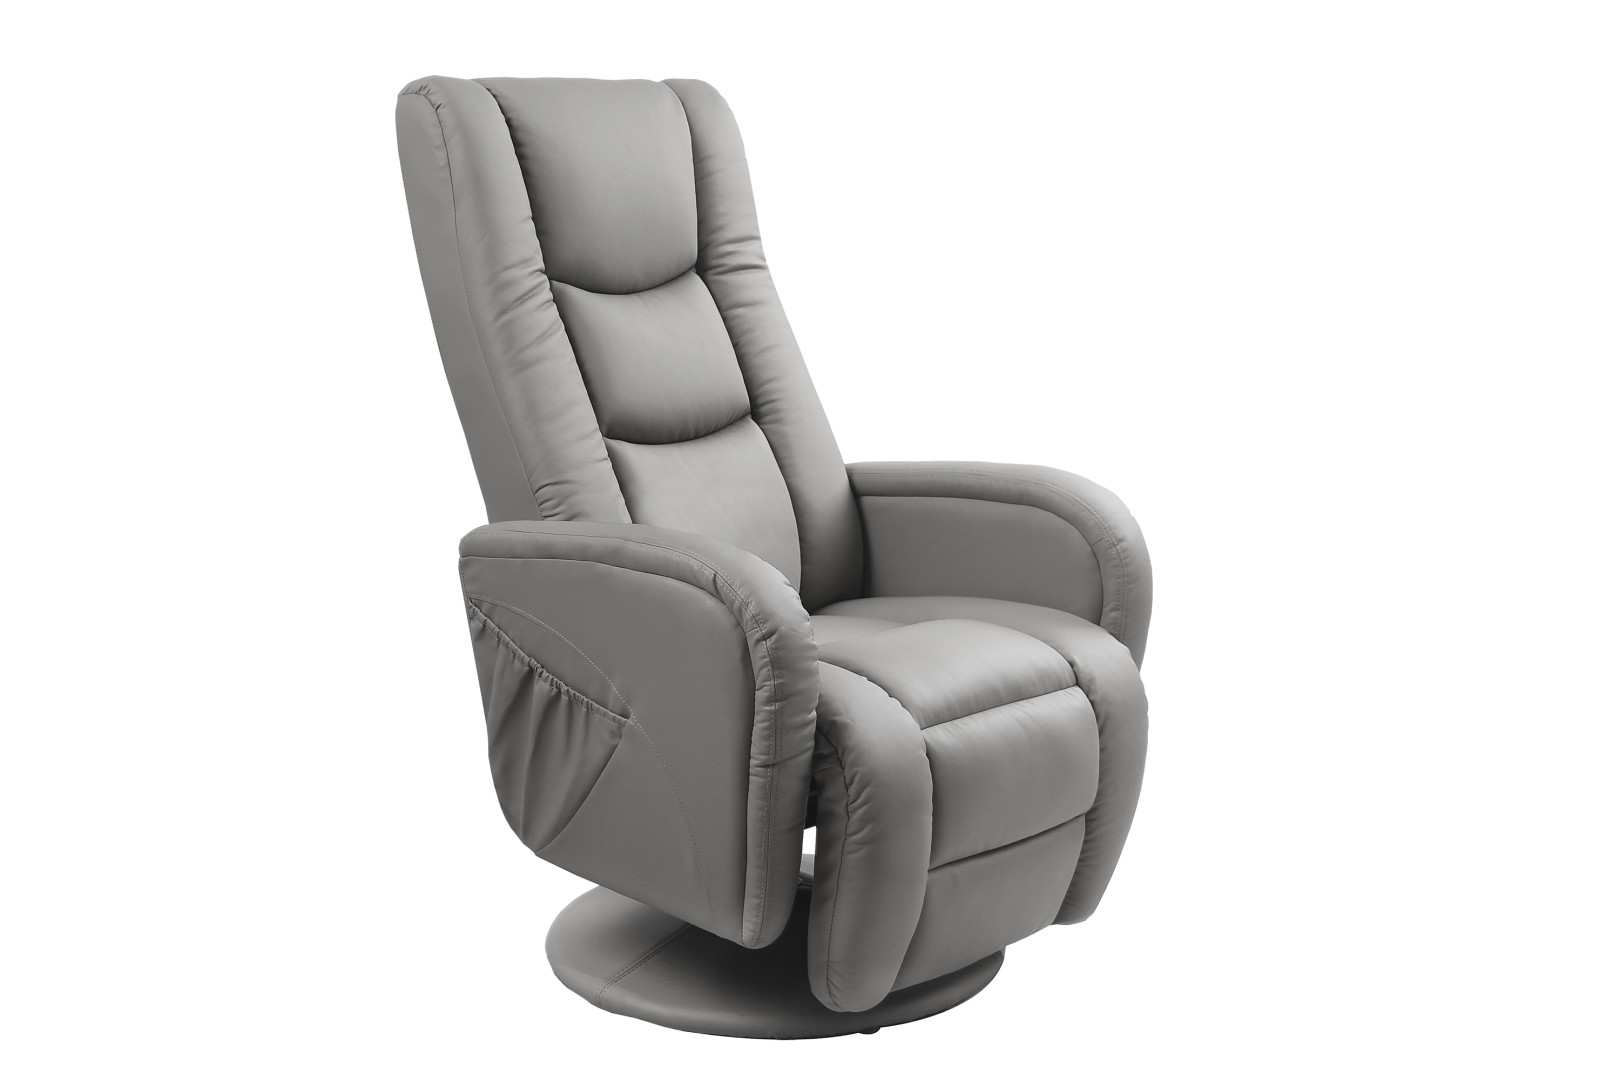 Fotel Pulsar - elegancki mebel relaksacyjny